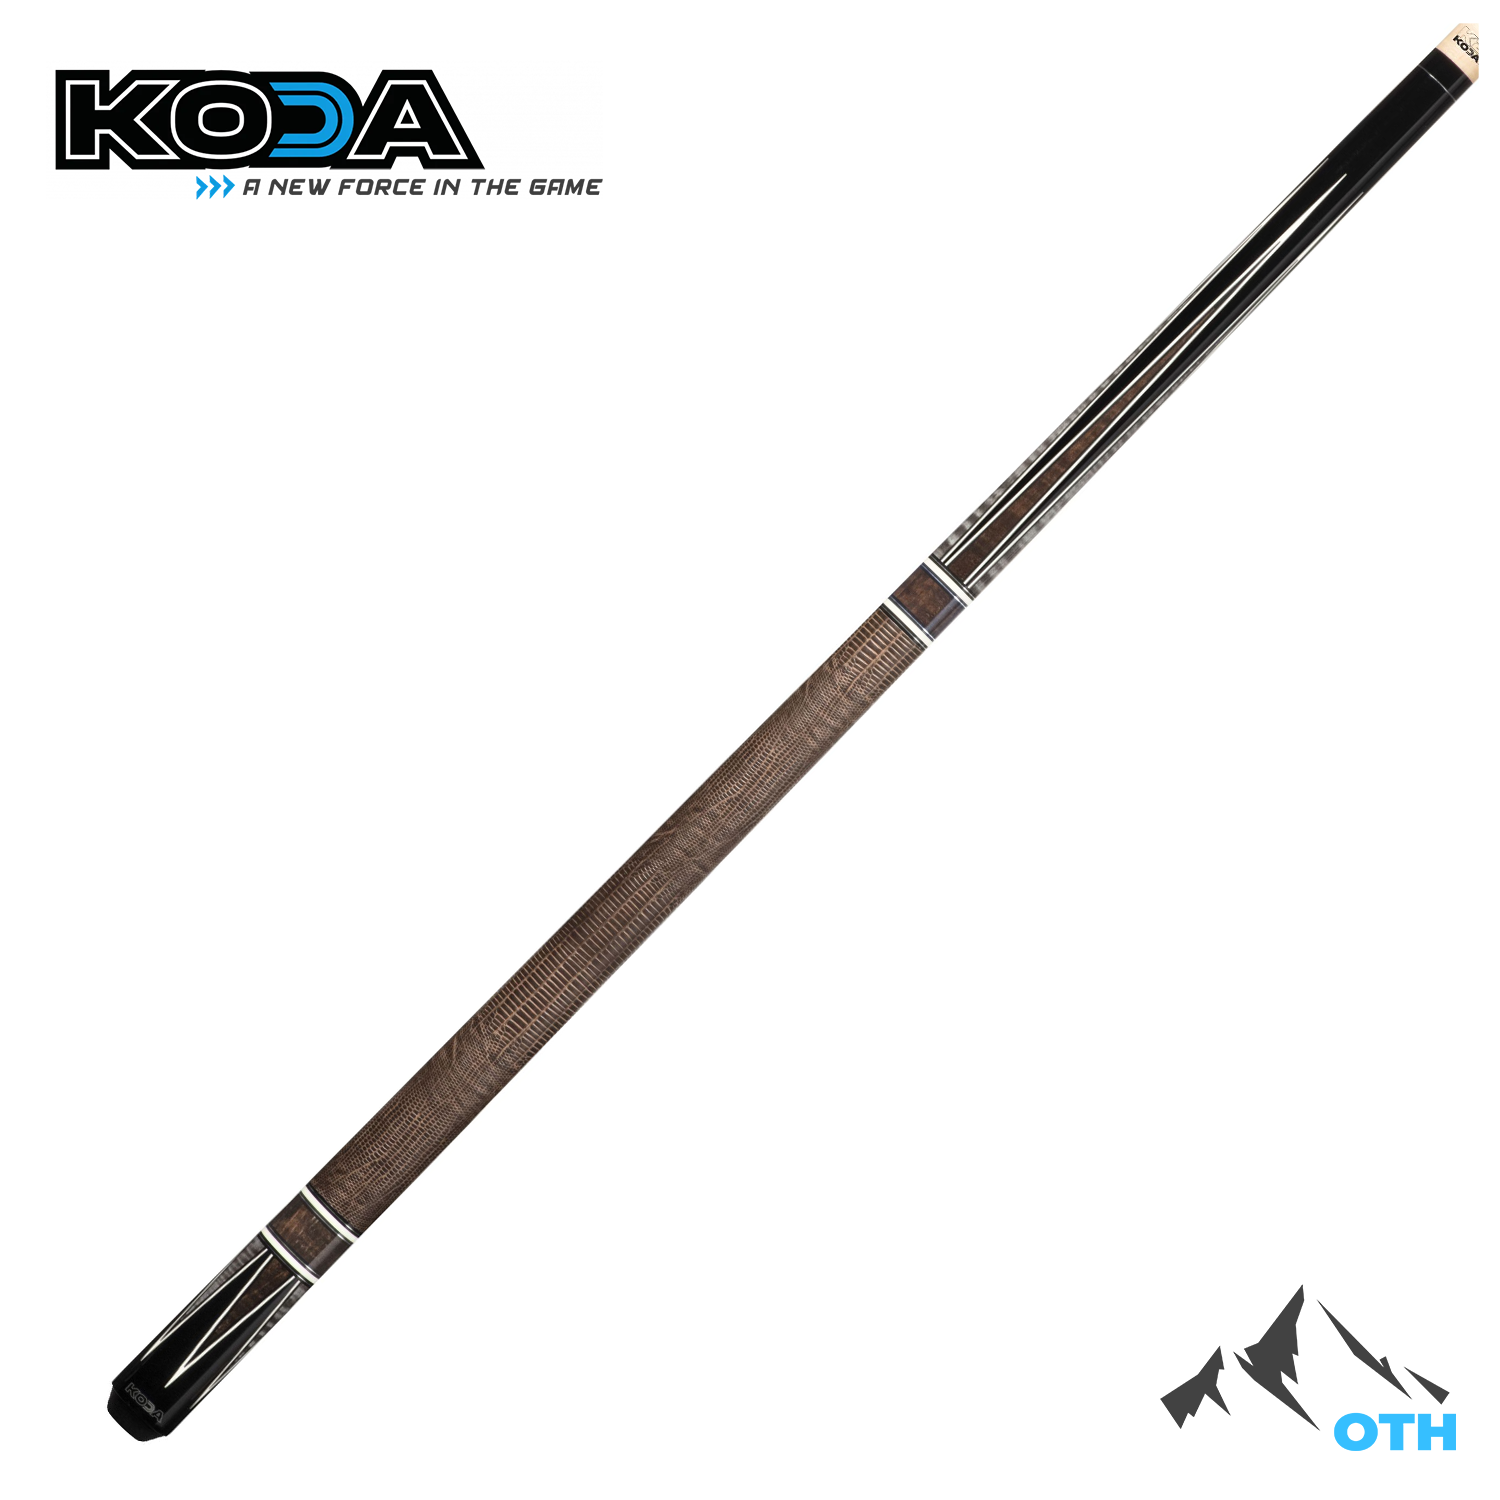 Koda K2 Series KL190